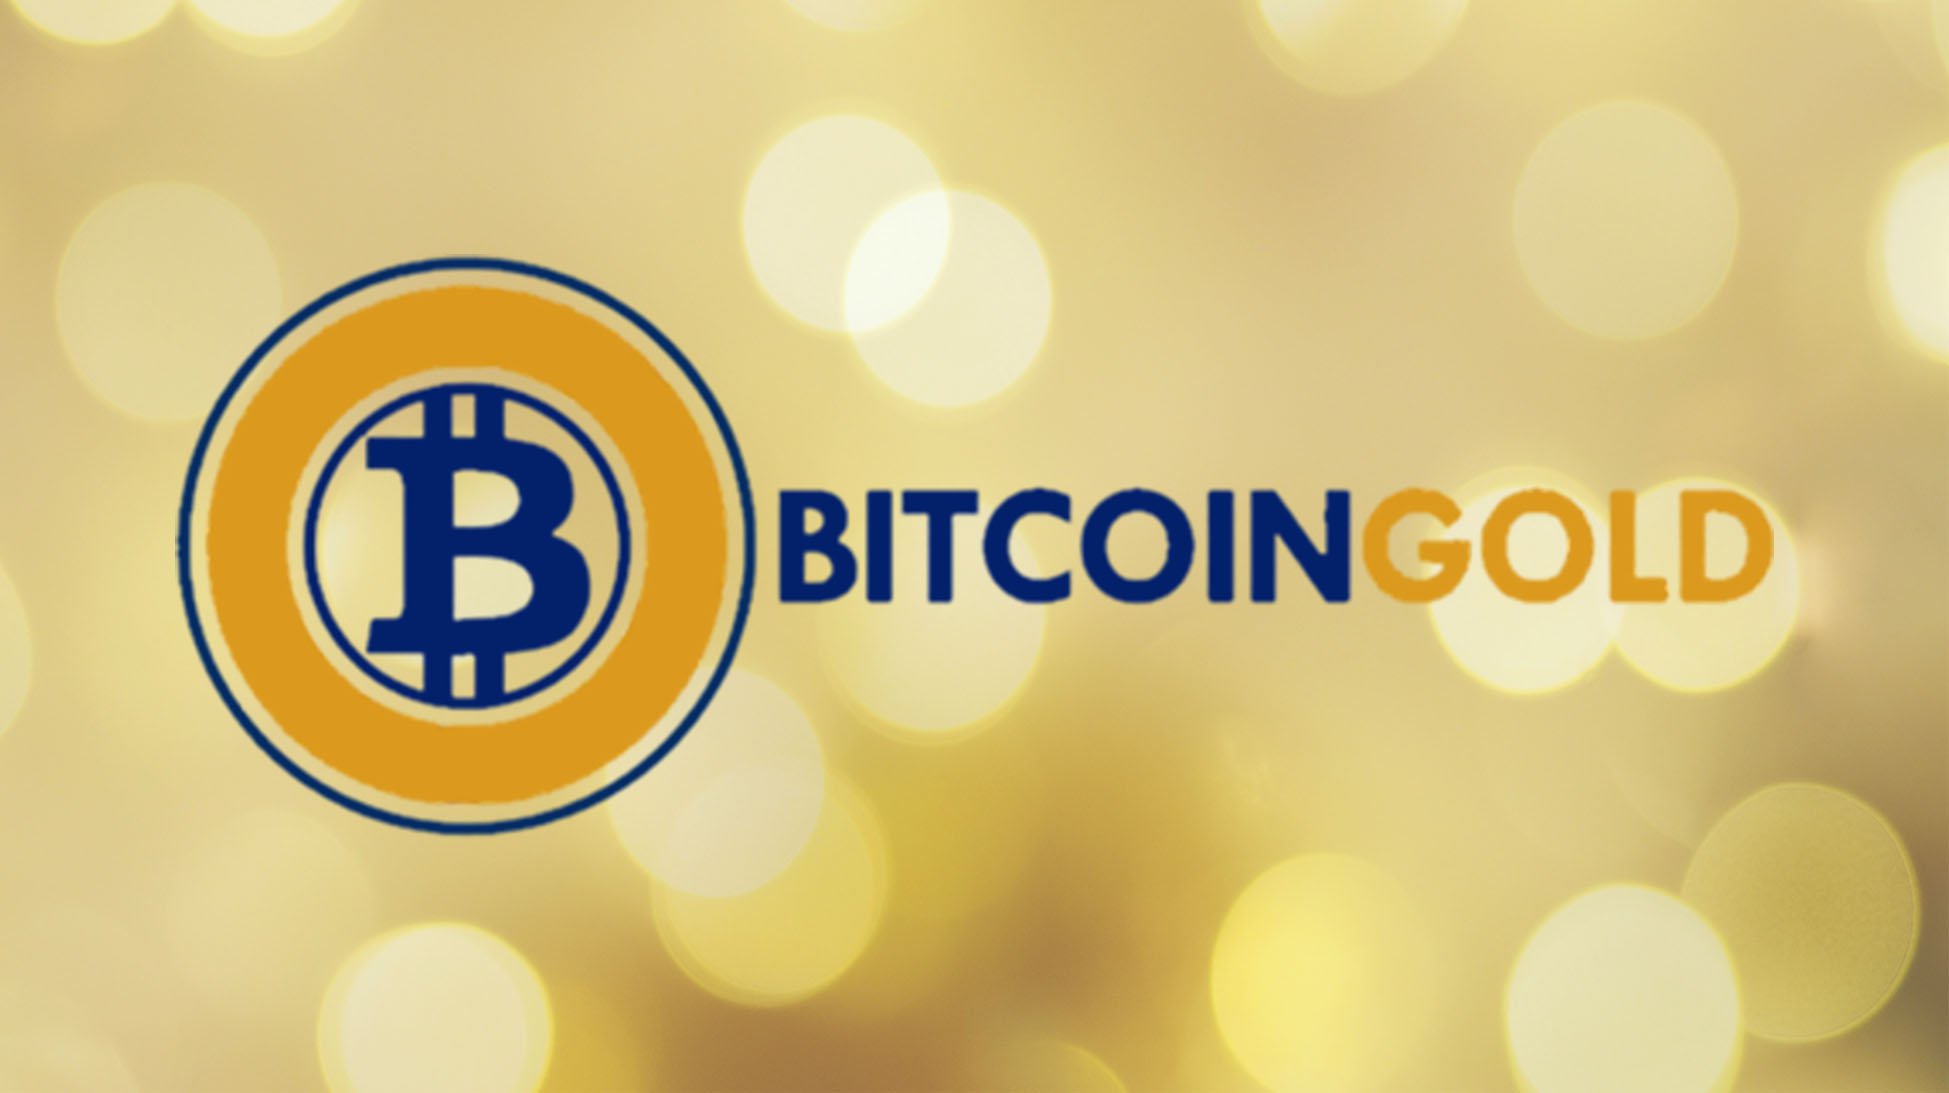 Bitcoin Gold Launches Tomorrow - Bitcoin Magazine